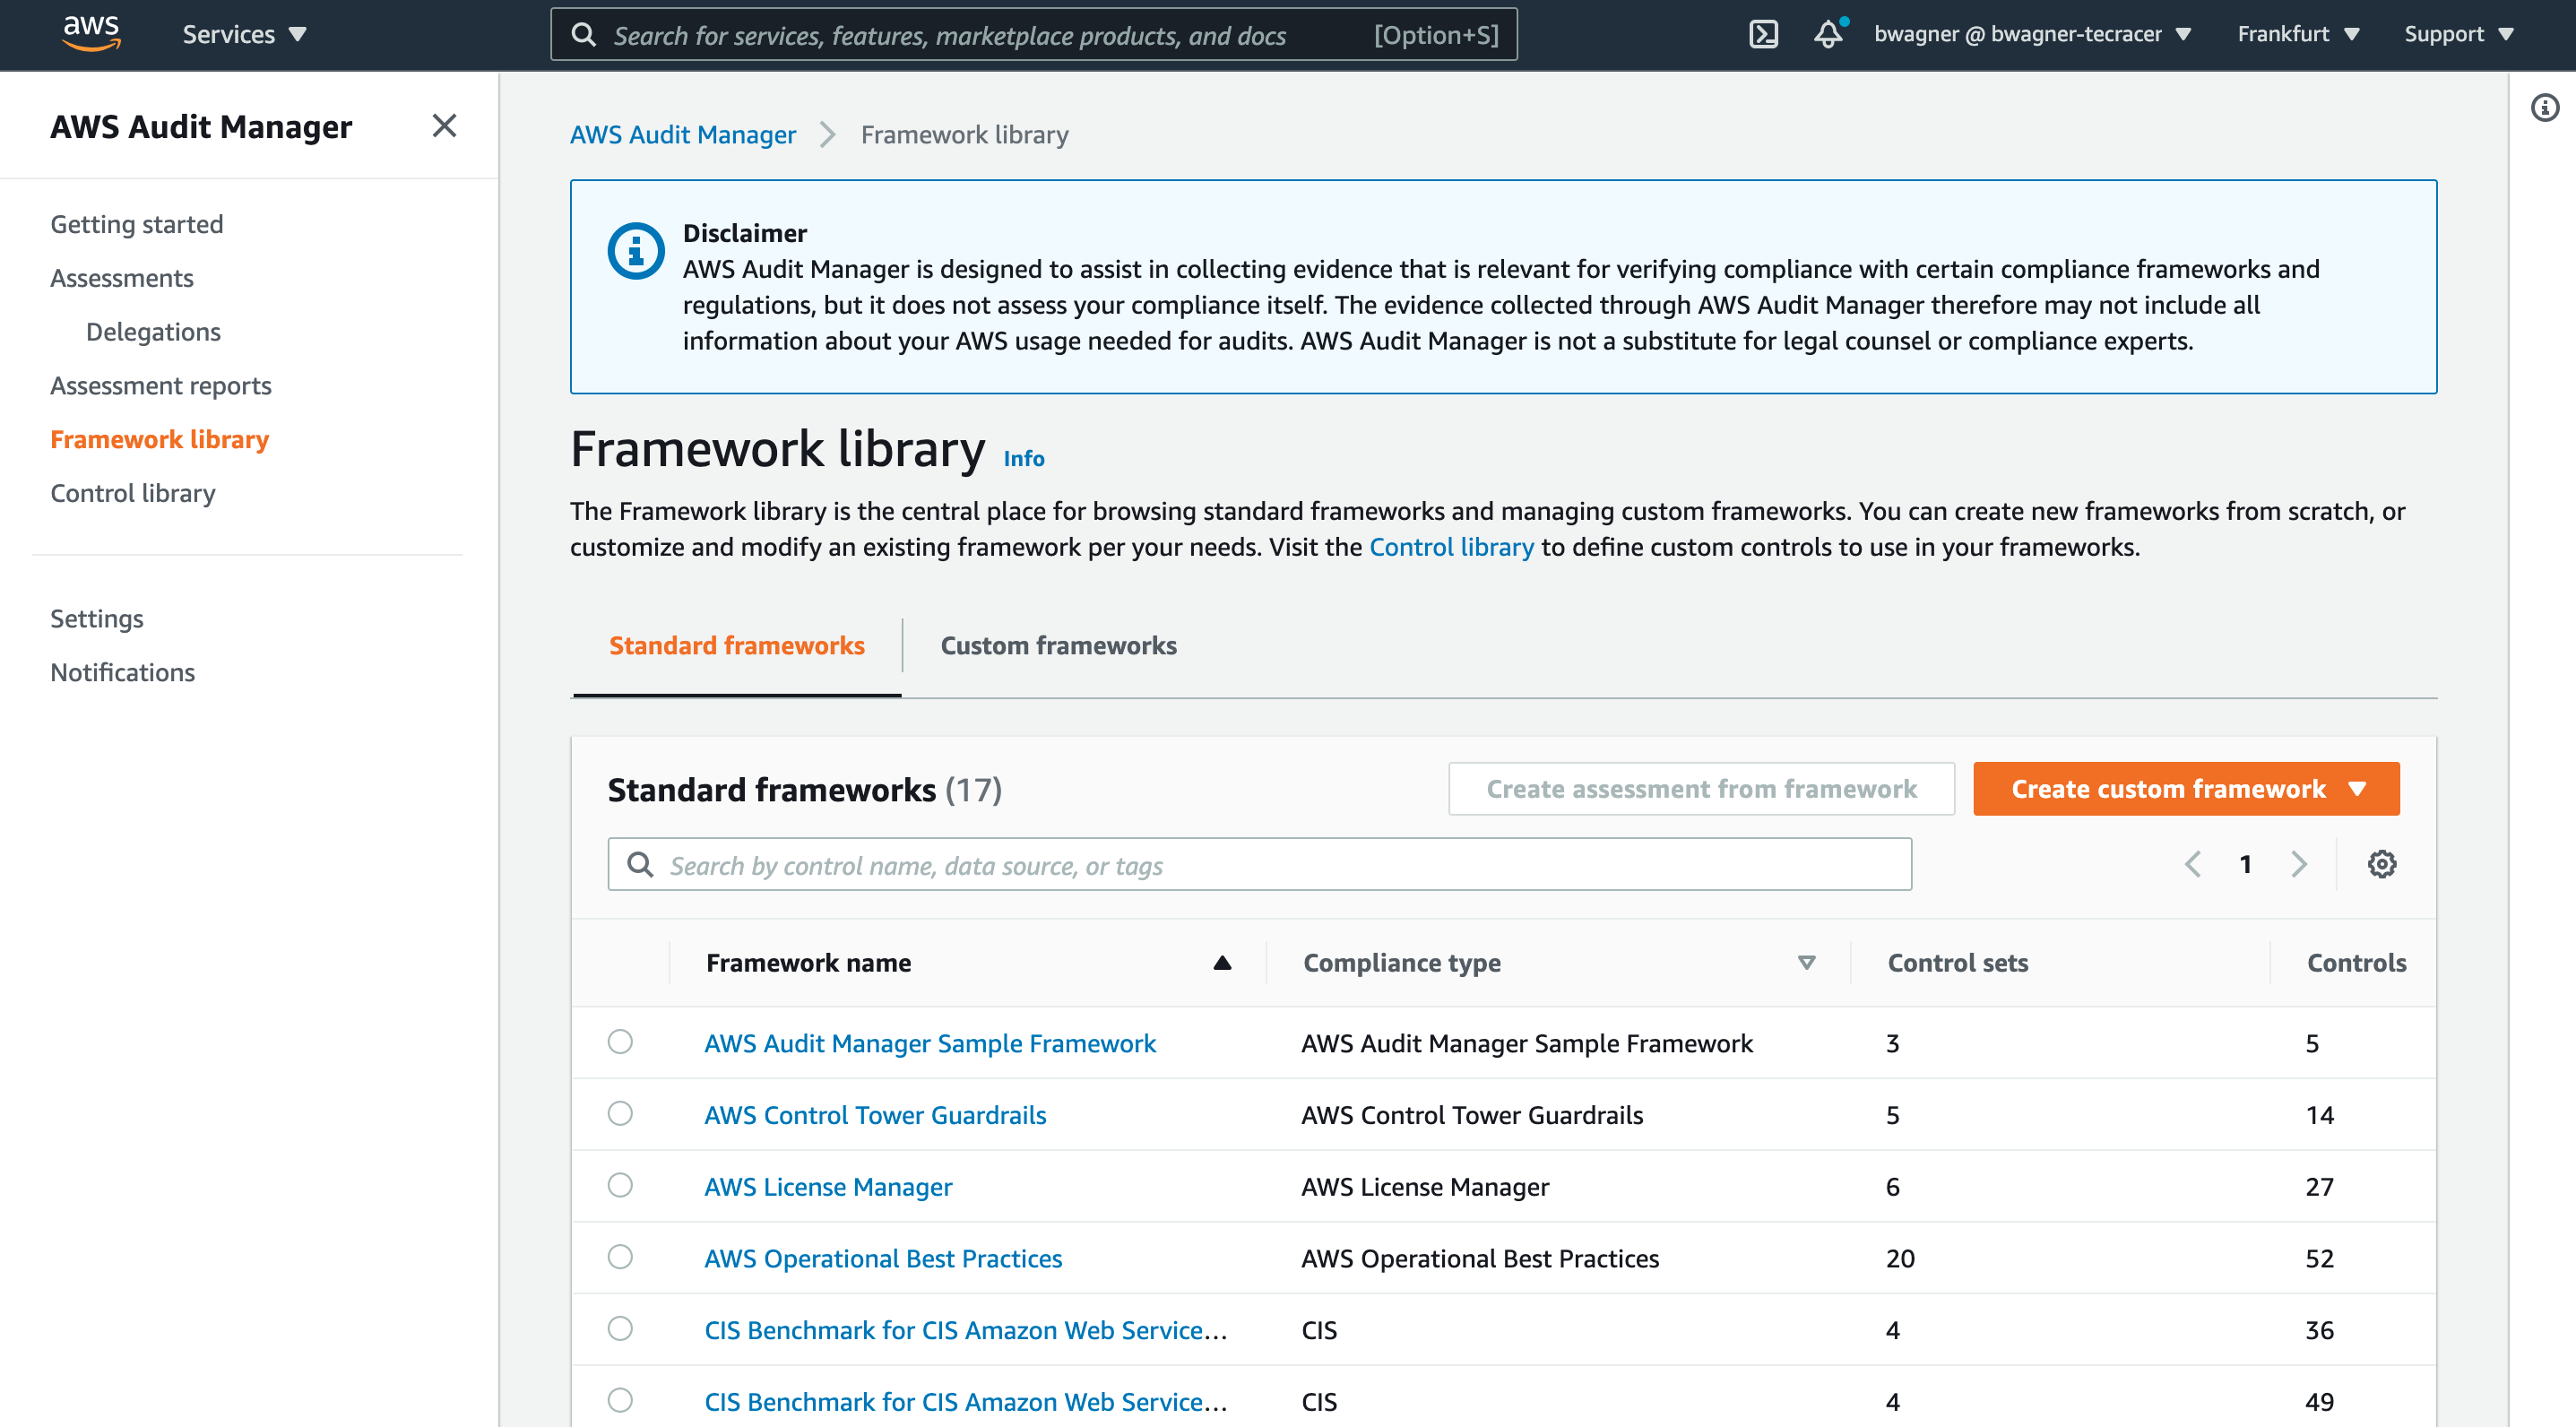 AWS Audit Manager’s built-in framework library